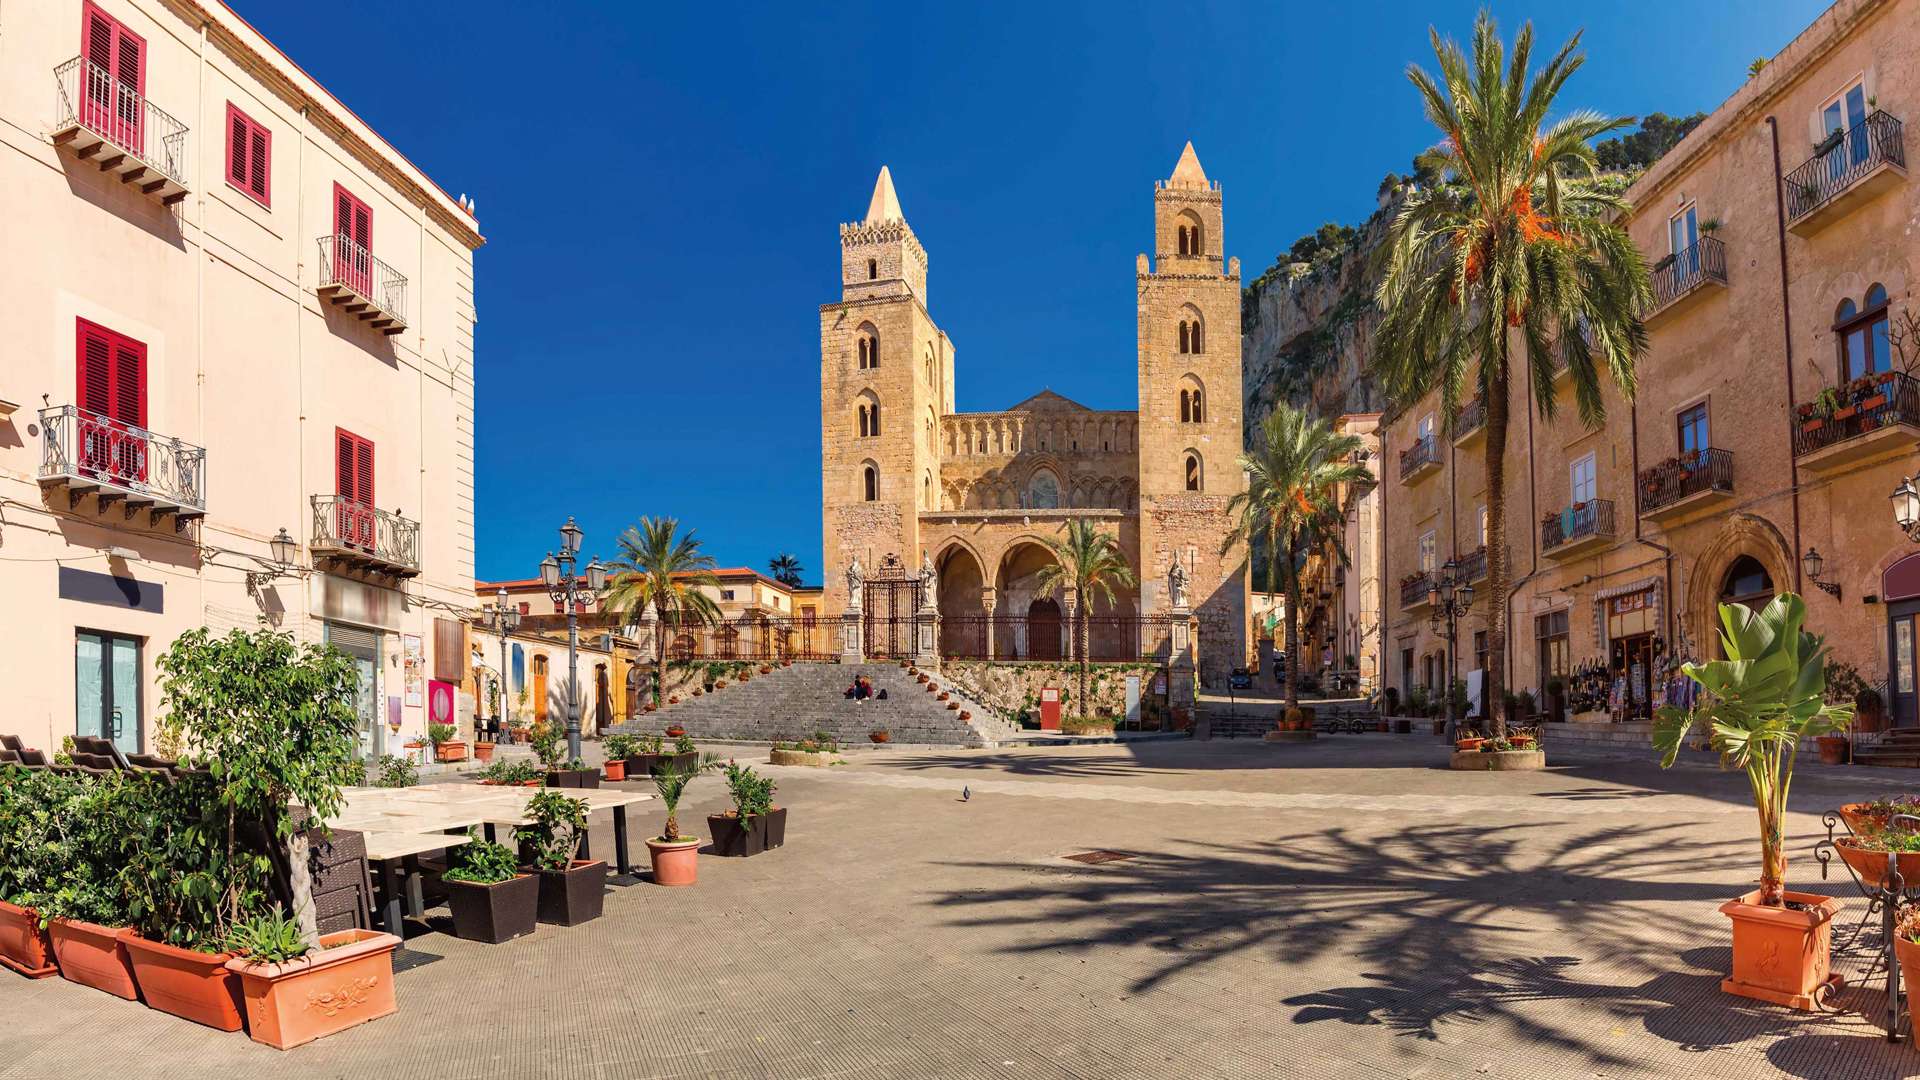 Cefalu, Sicily, Italy